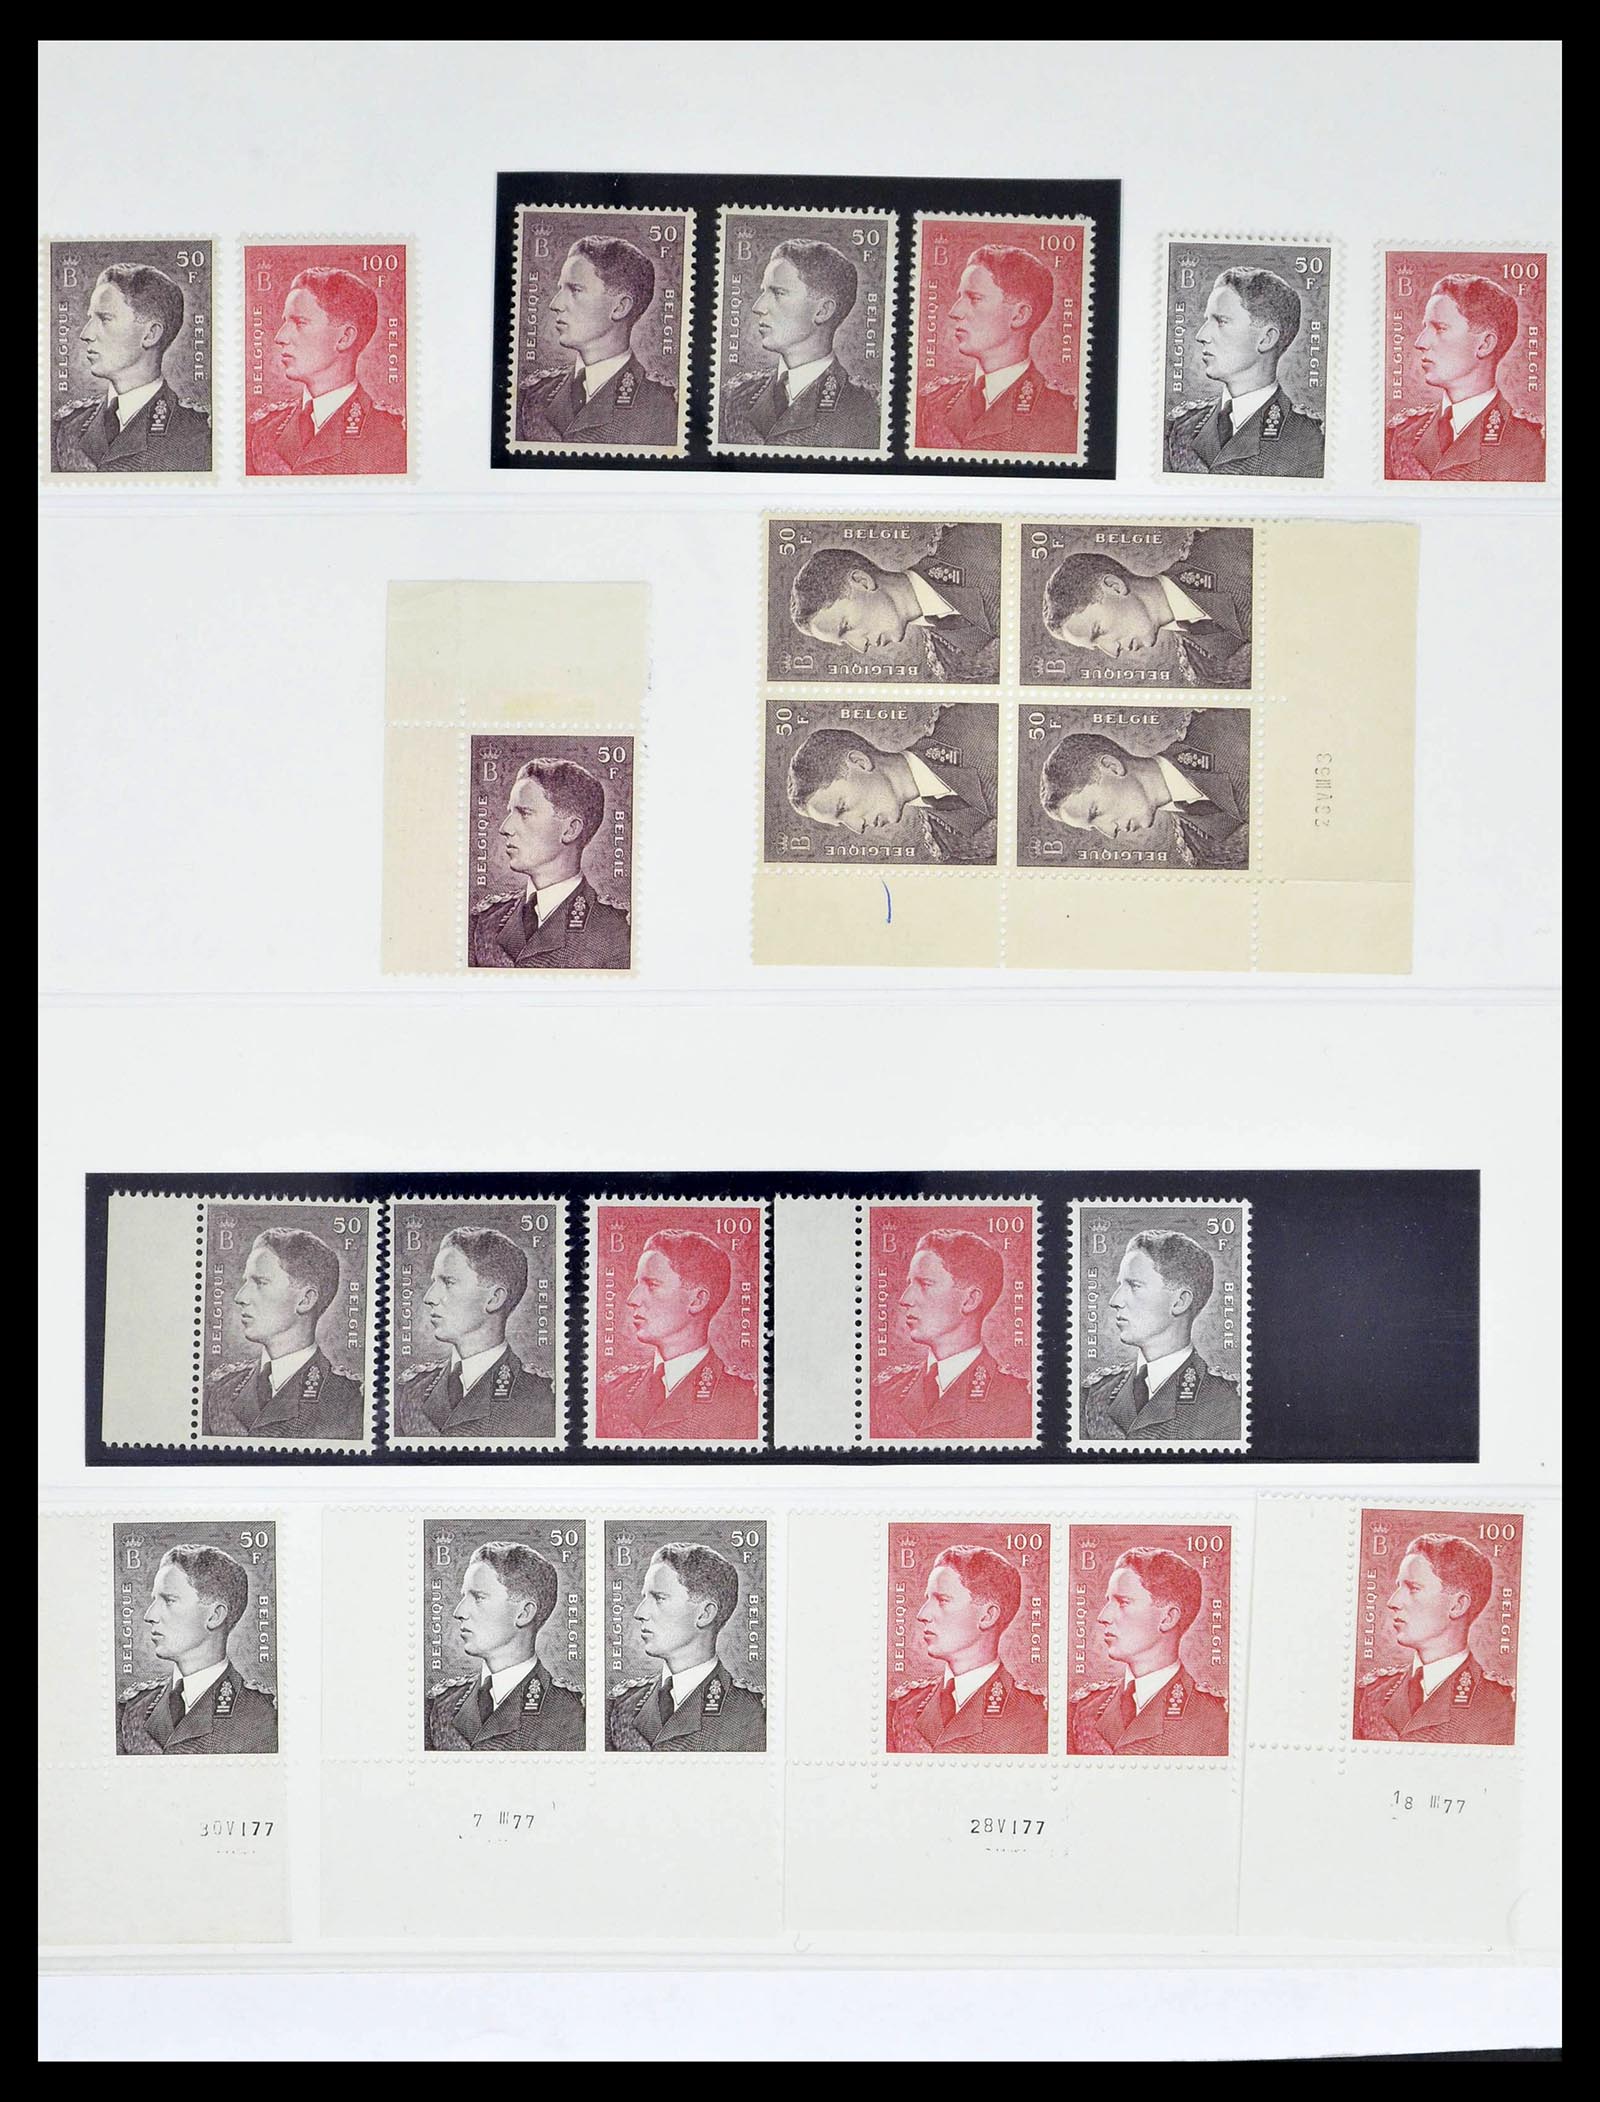 39229 0002 - Stamp collection 39229 Belgium Boudewijn with glasses 1952-1975.